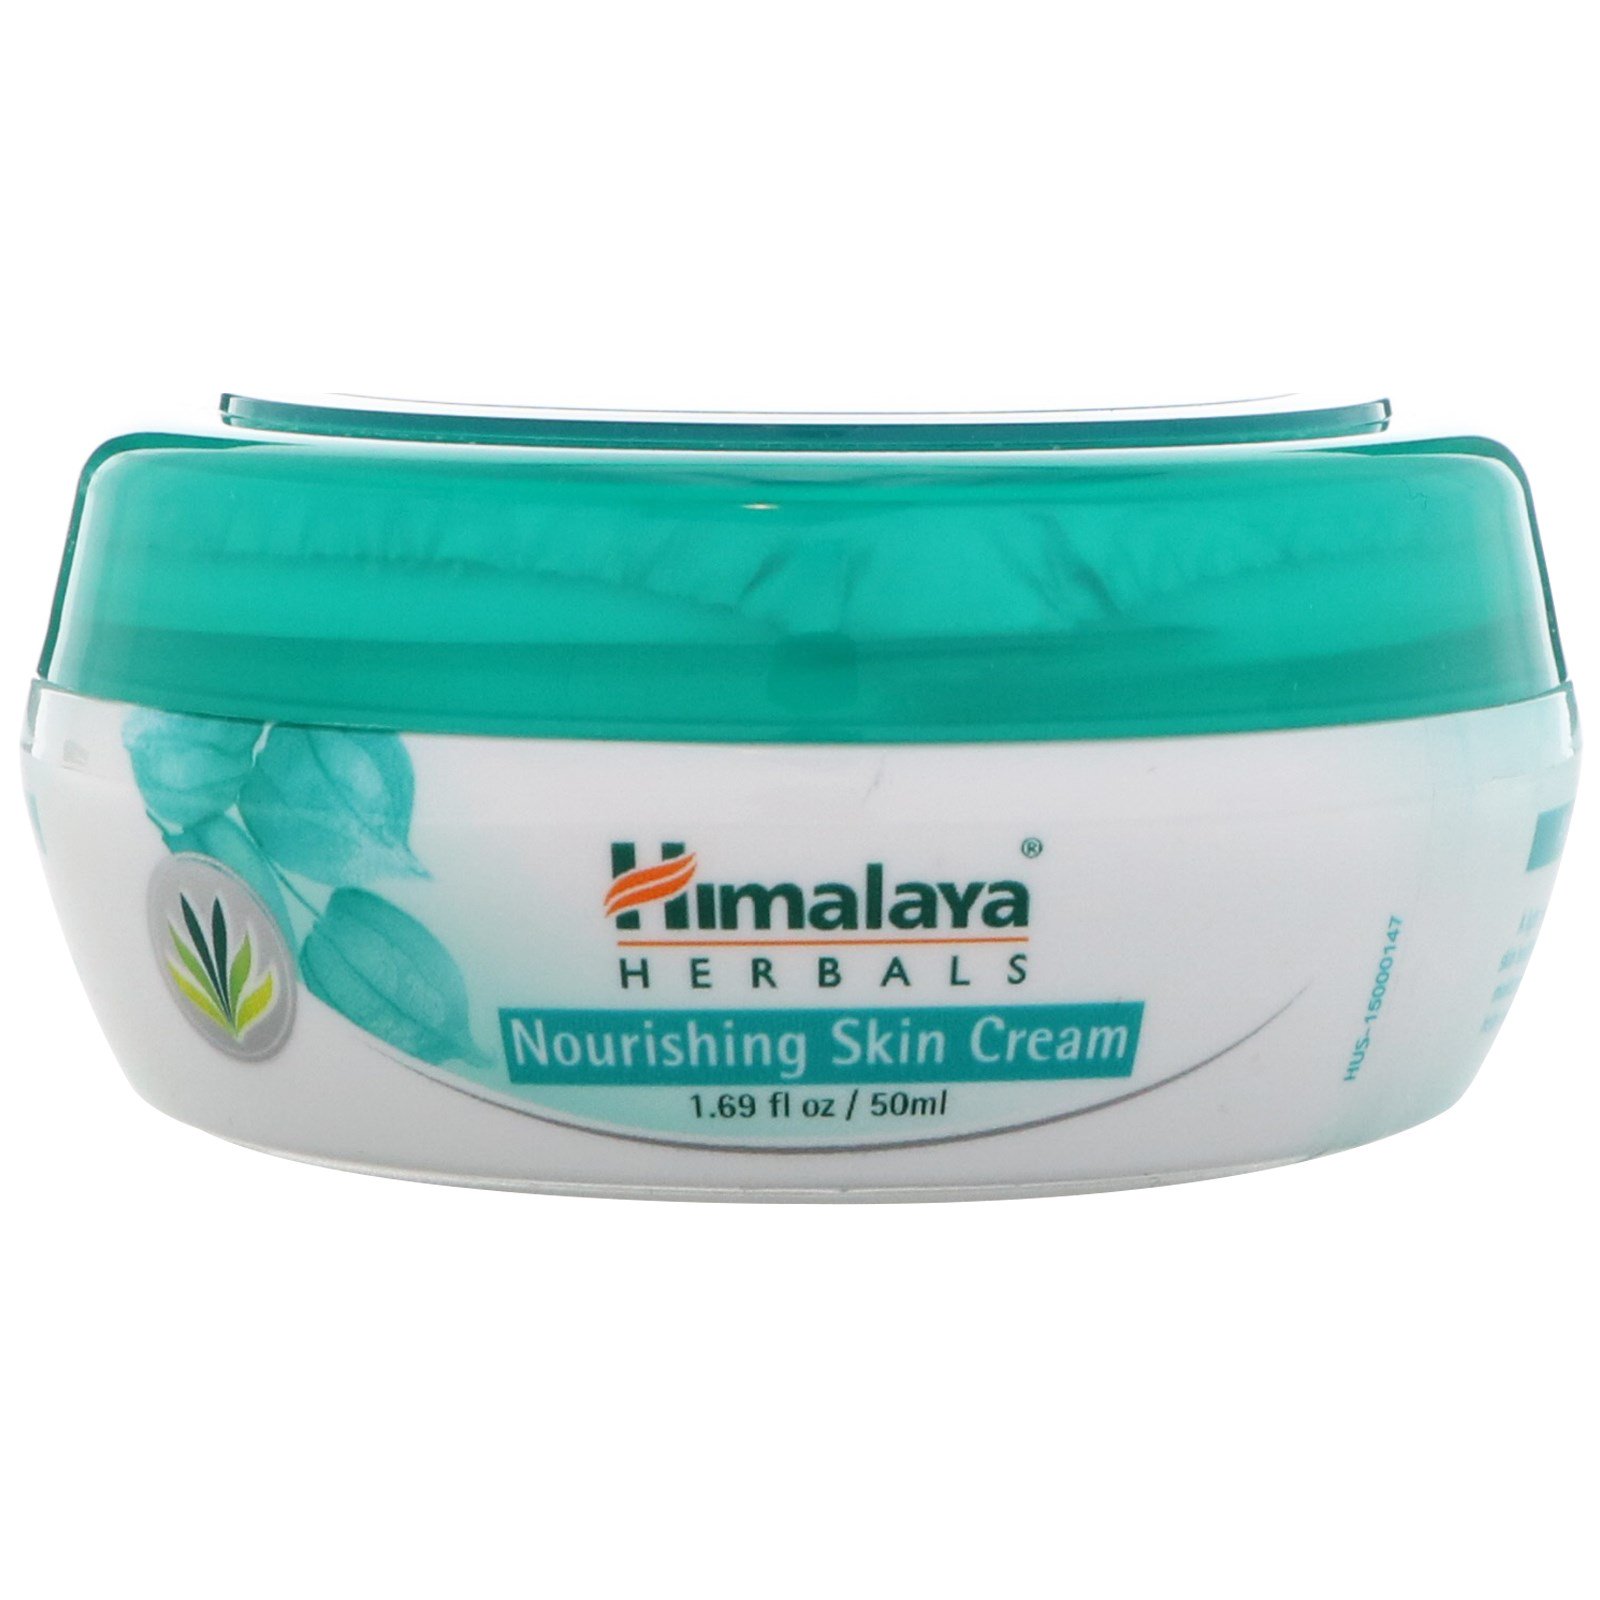 Himalaya увлажняющий крем. "Himalaya Herbals" Nourishing Skin Cream 50ml.. Nourishing Skin Cream Himalaya. Nourishing Skin Cream Himalaya 50 ml. Увлажняющий крем Хималая 50 мл.